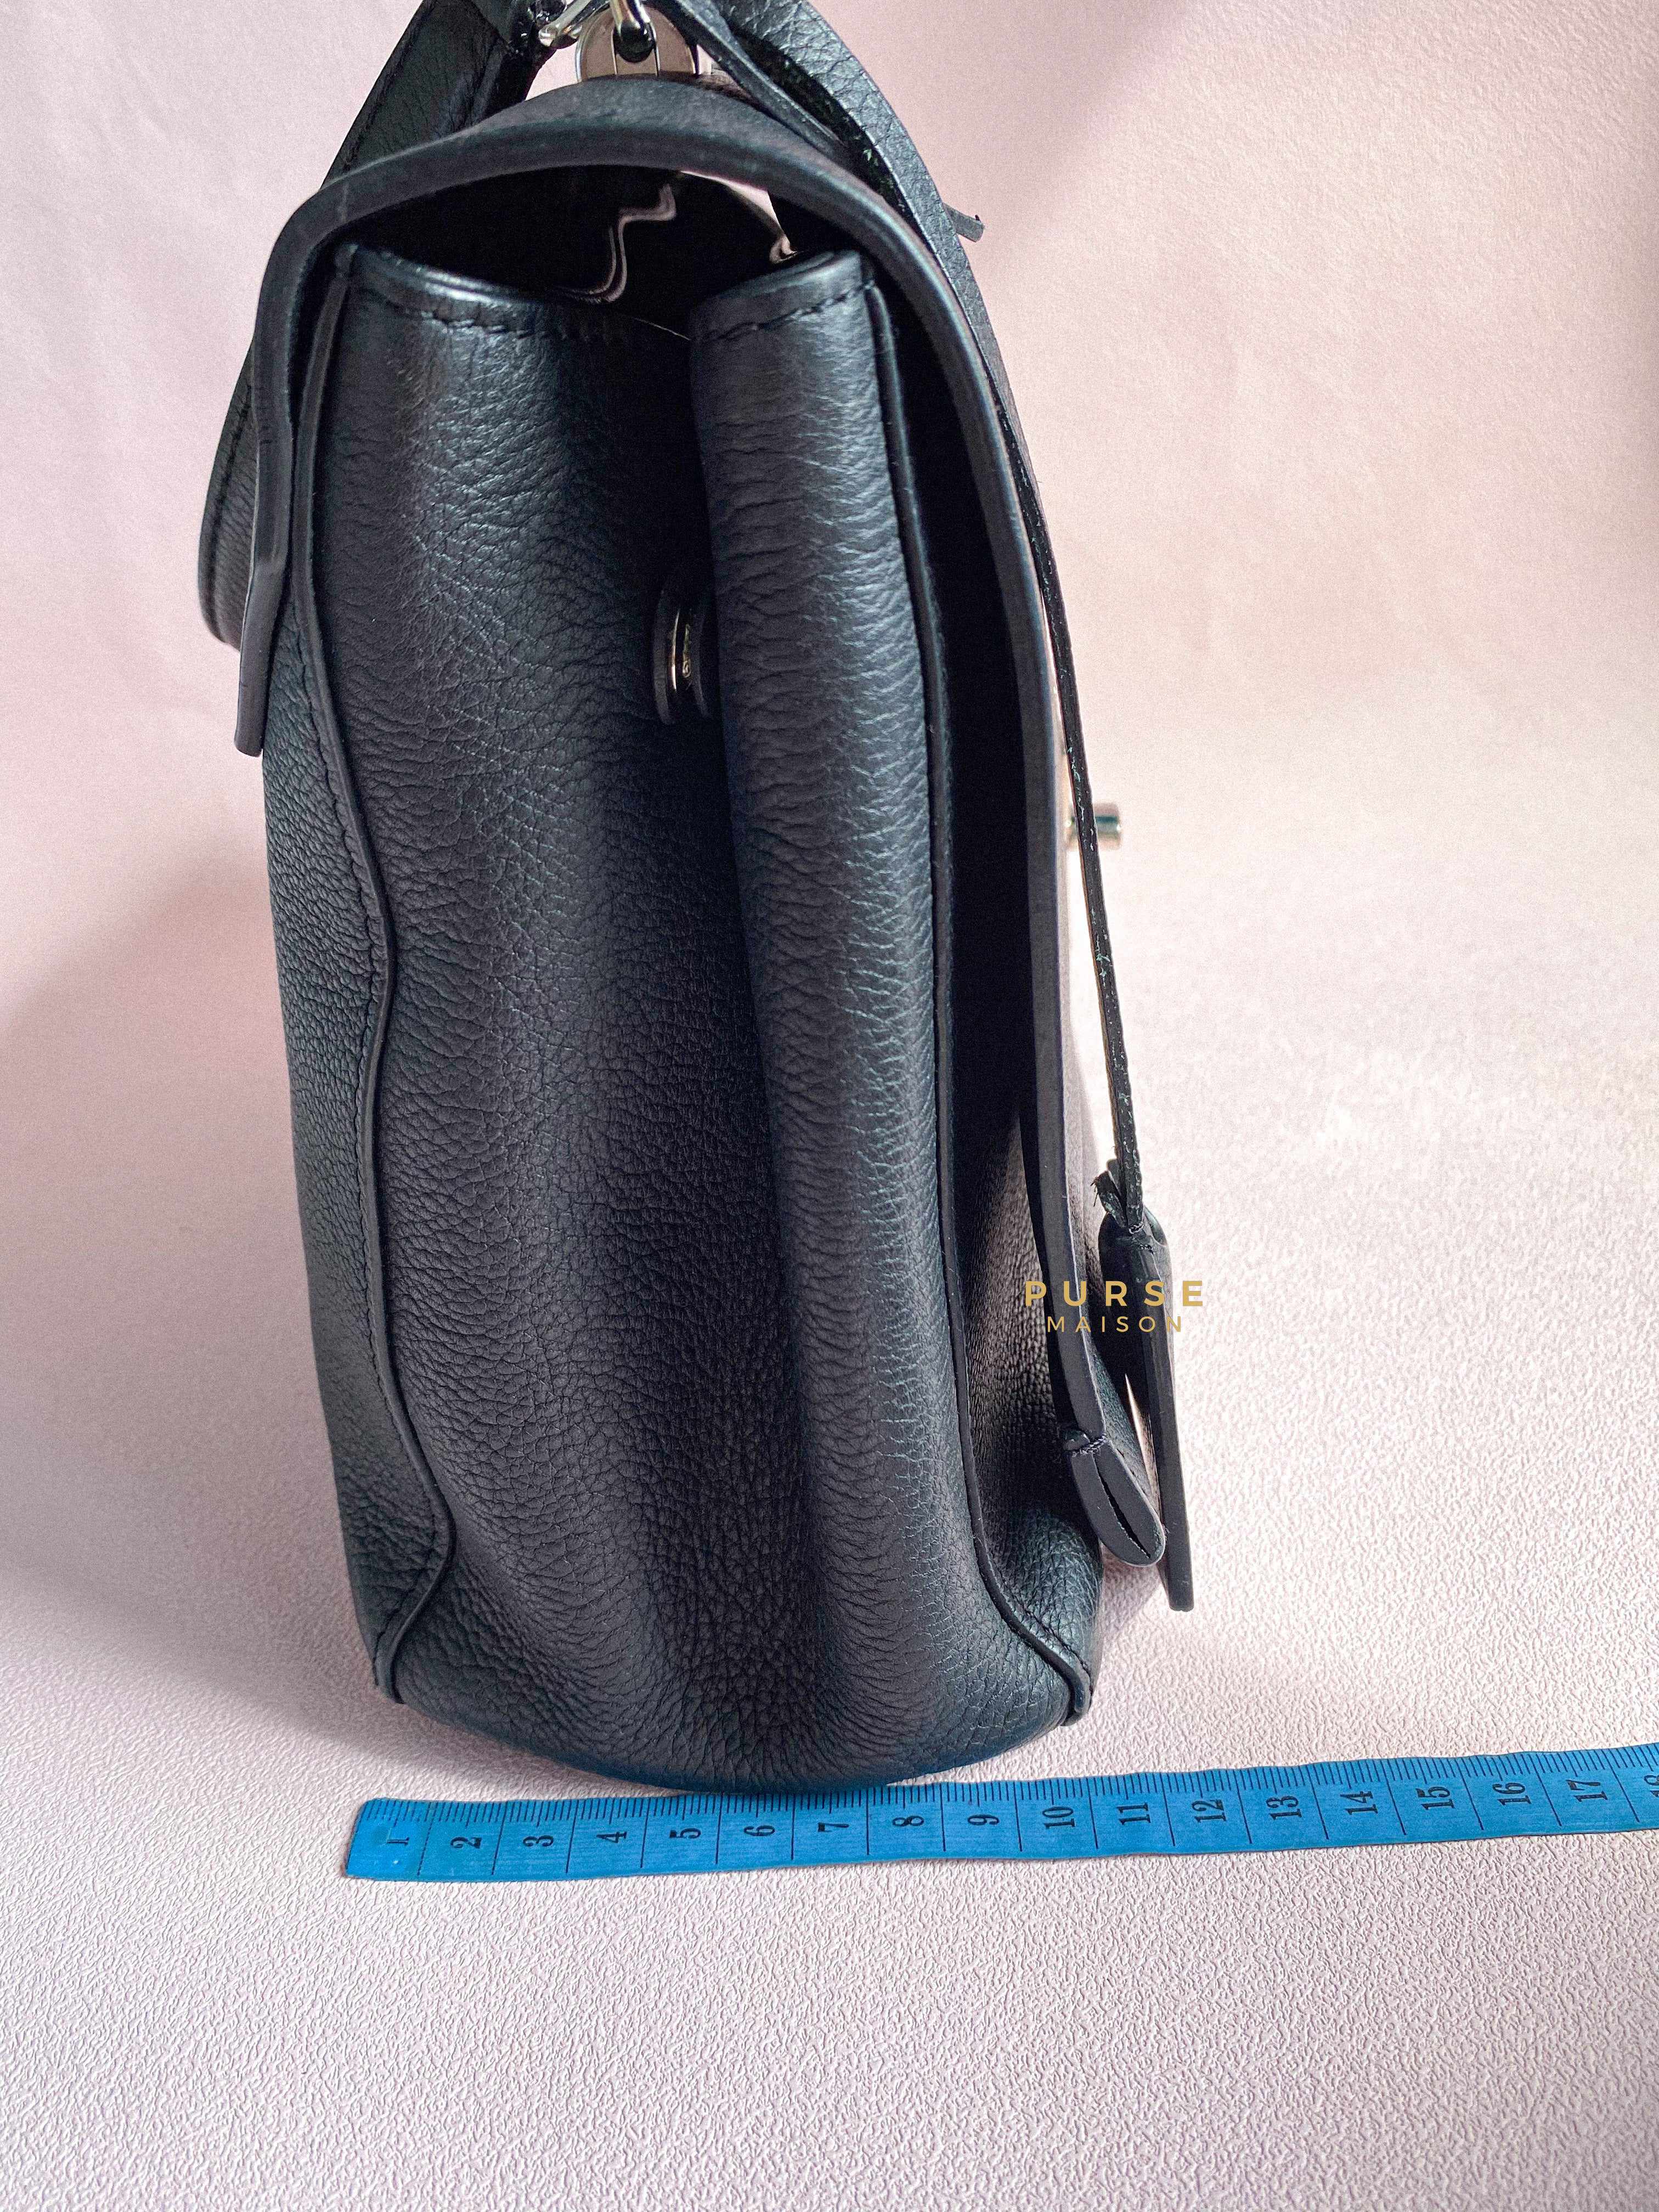 Louis Vuitton Lockme II Bag in Black Calfskin Leather (Date code: FL0127) | Purse Maison Luxury Bags Shop